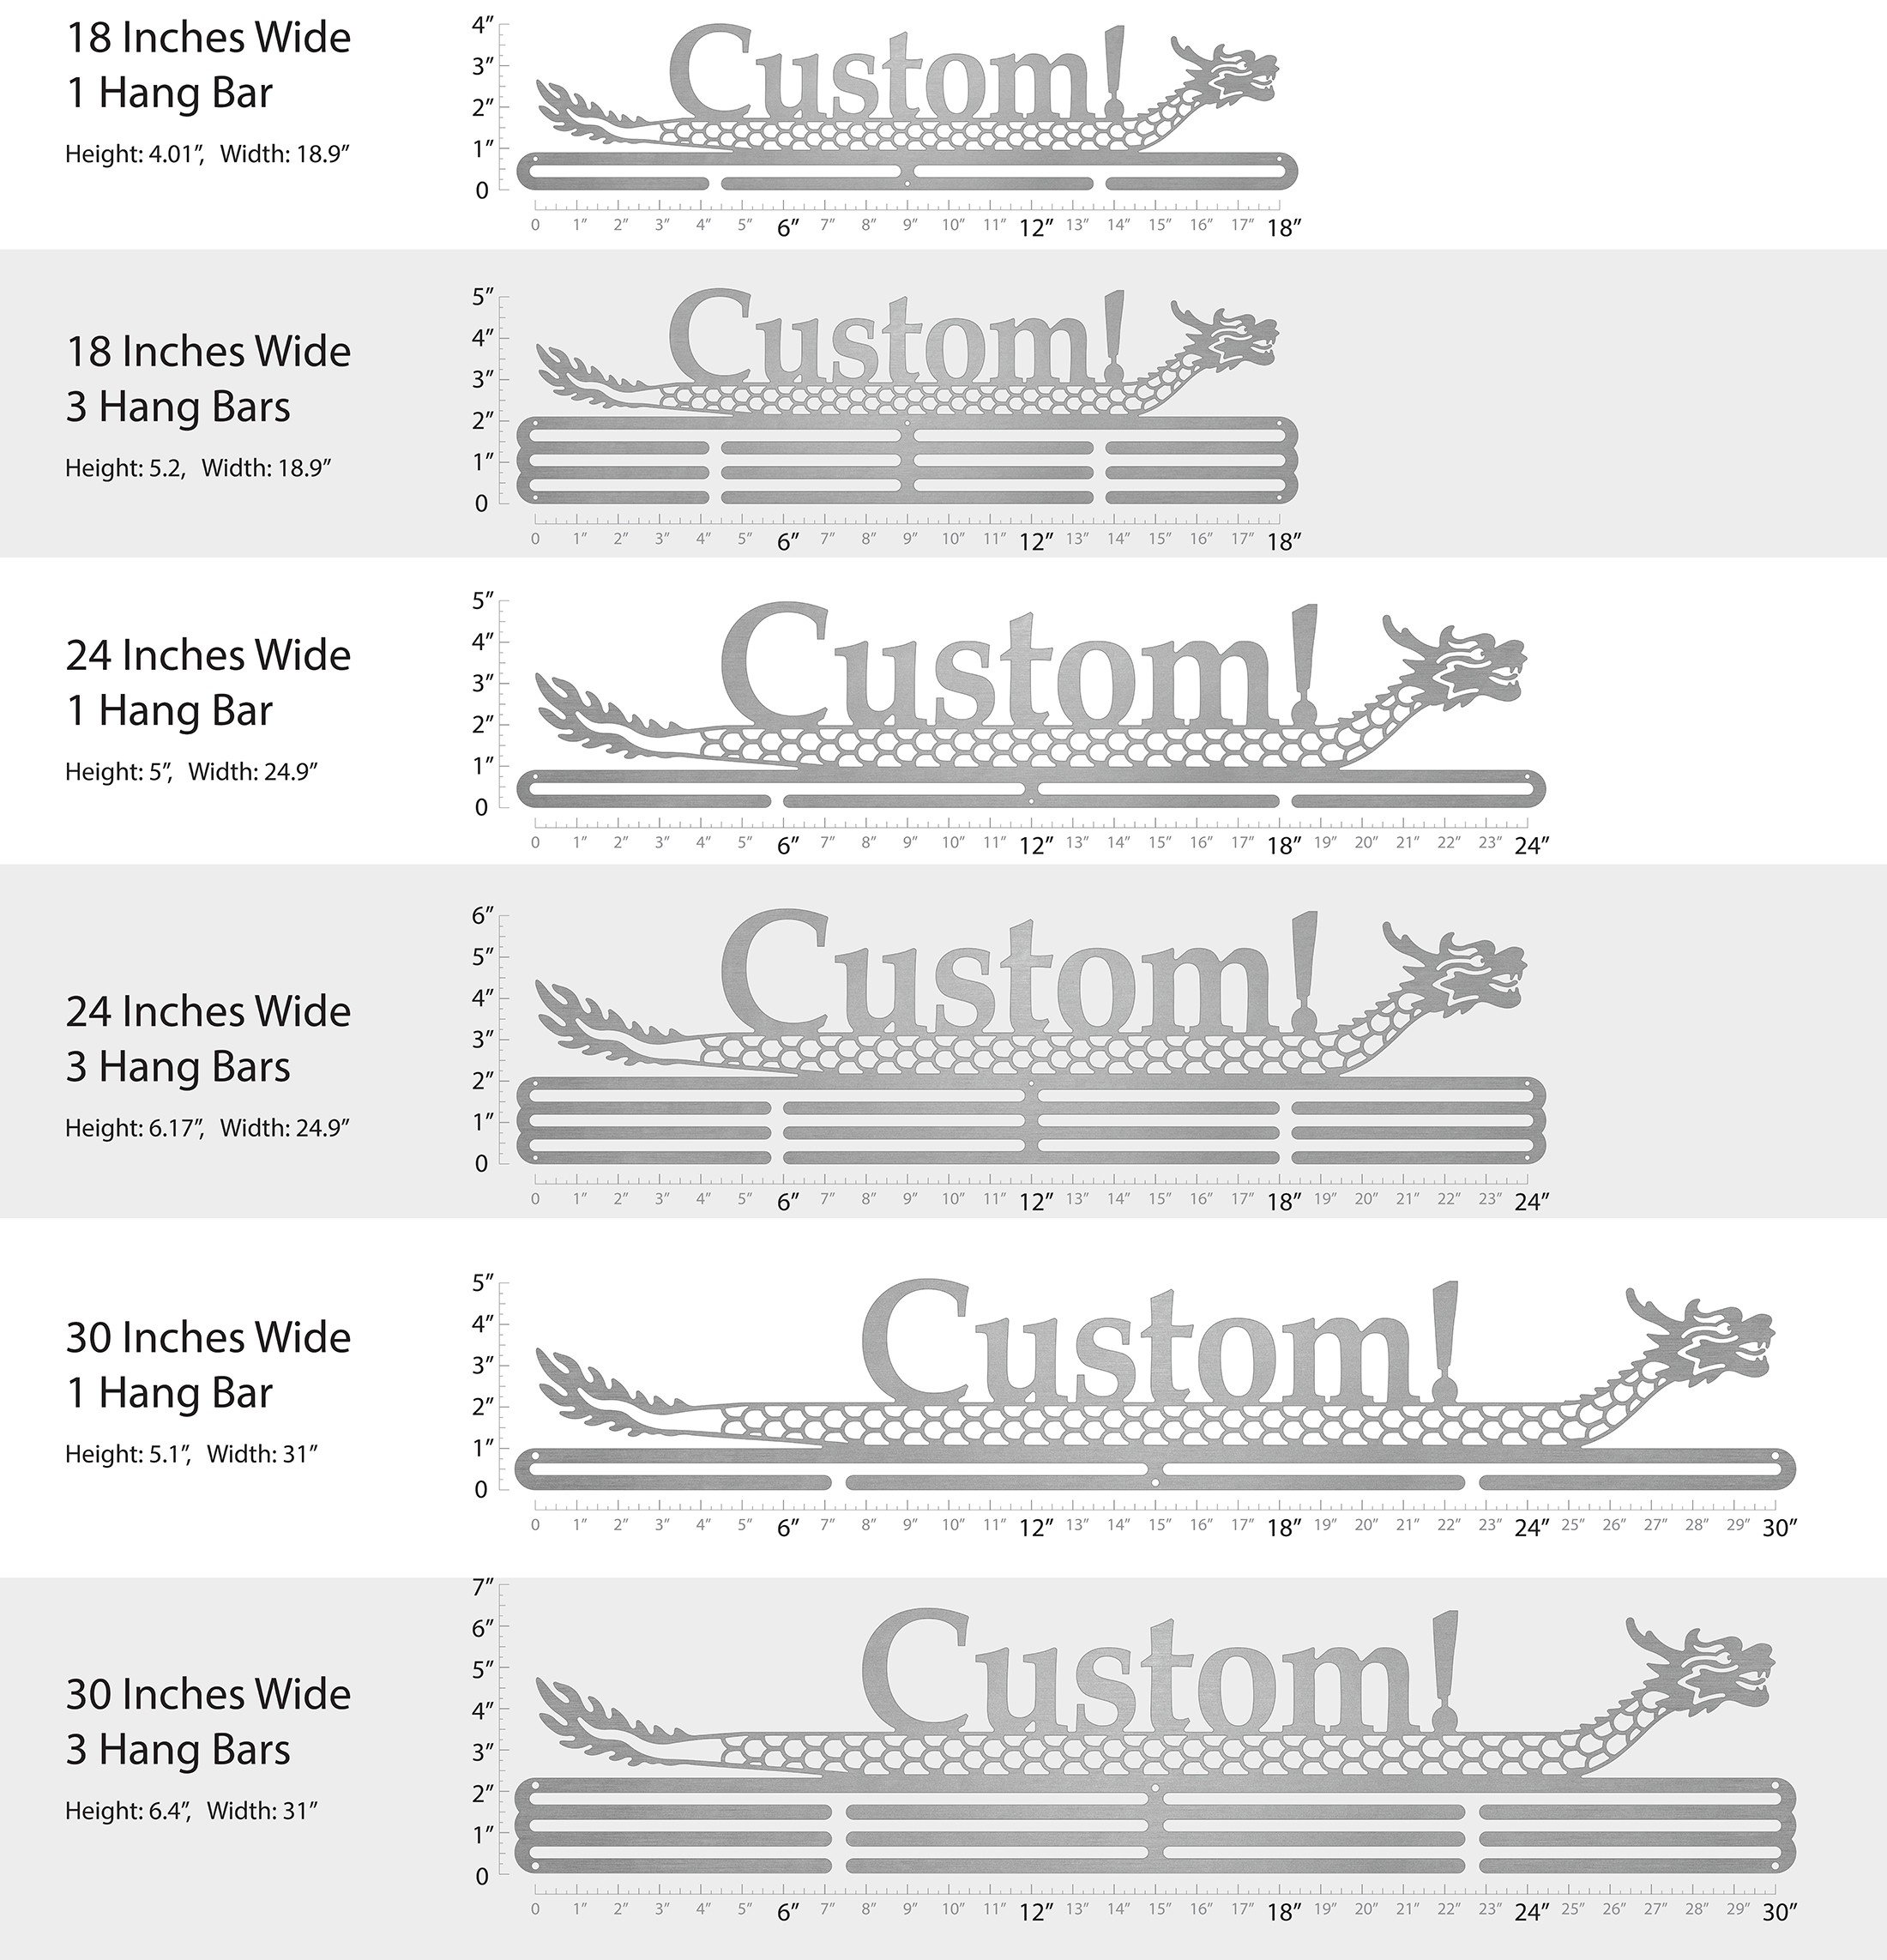 Dragon Boat: Custom Display